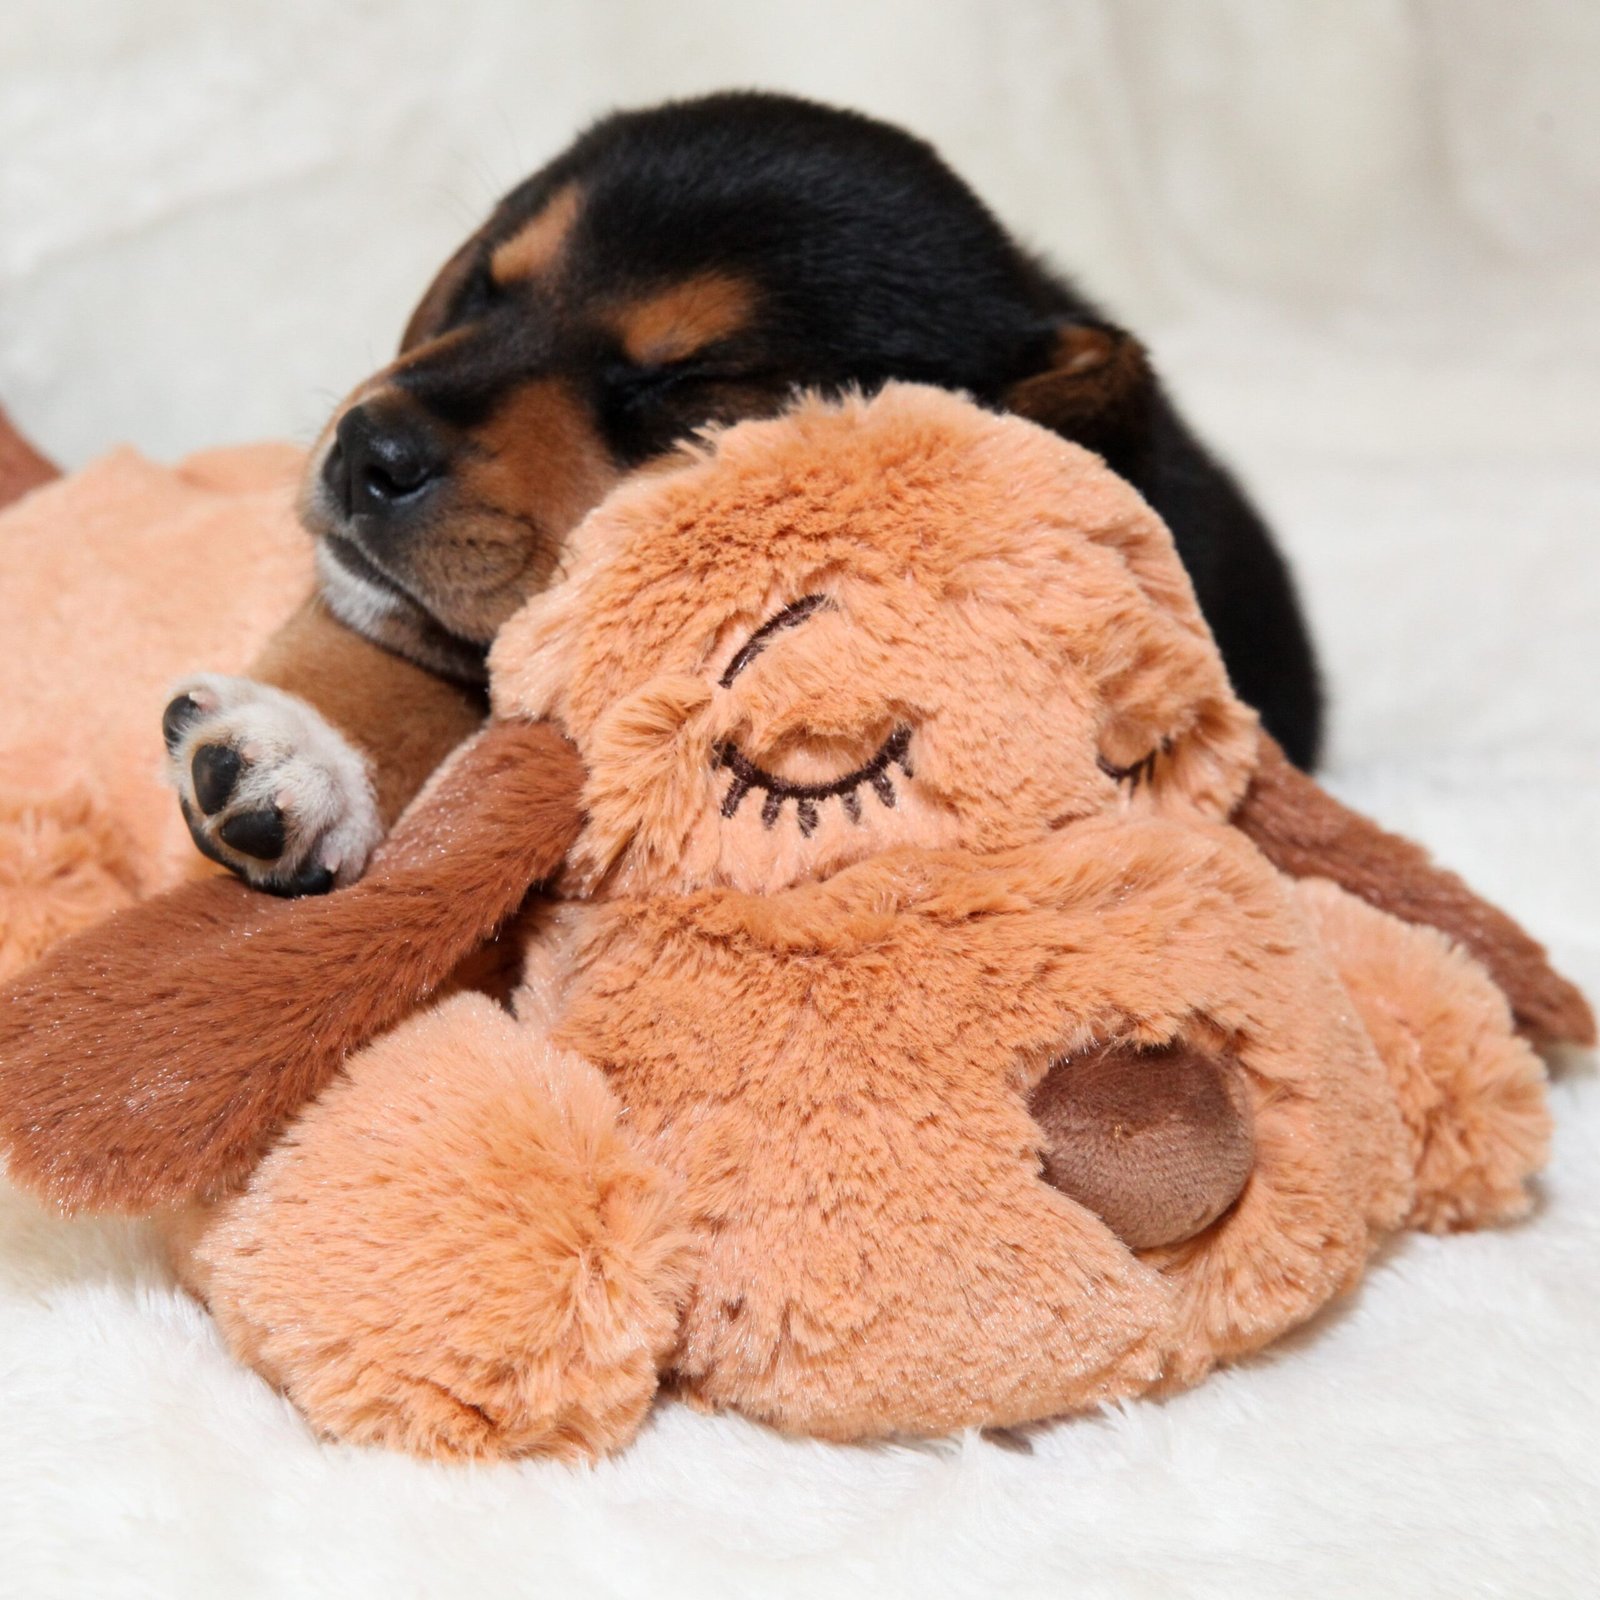 Snuggle Puppy dog toy